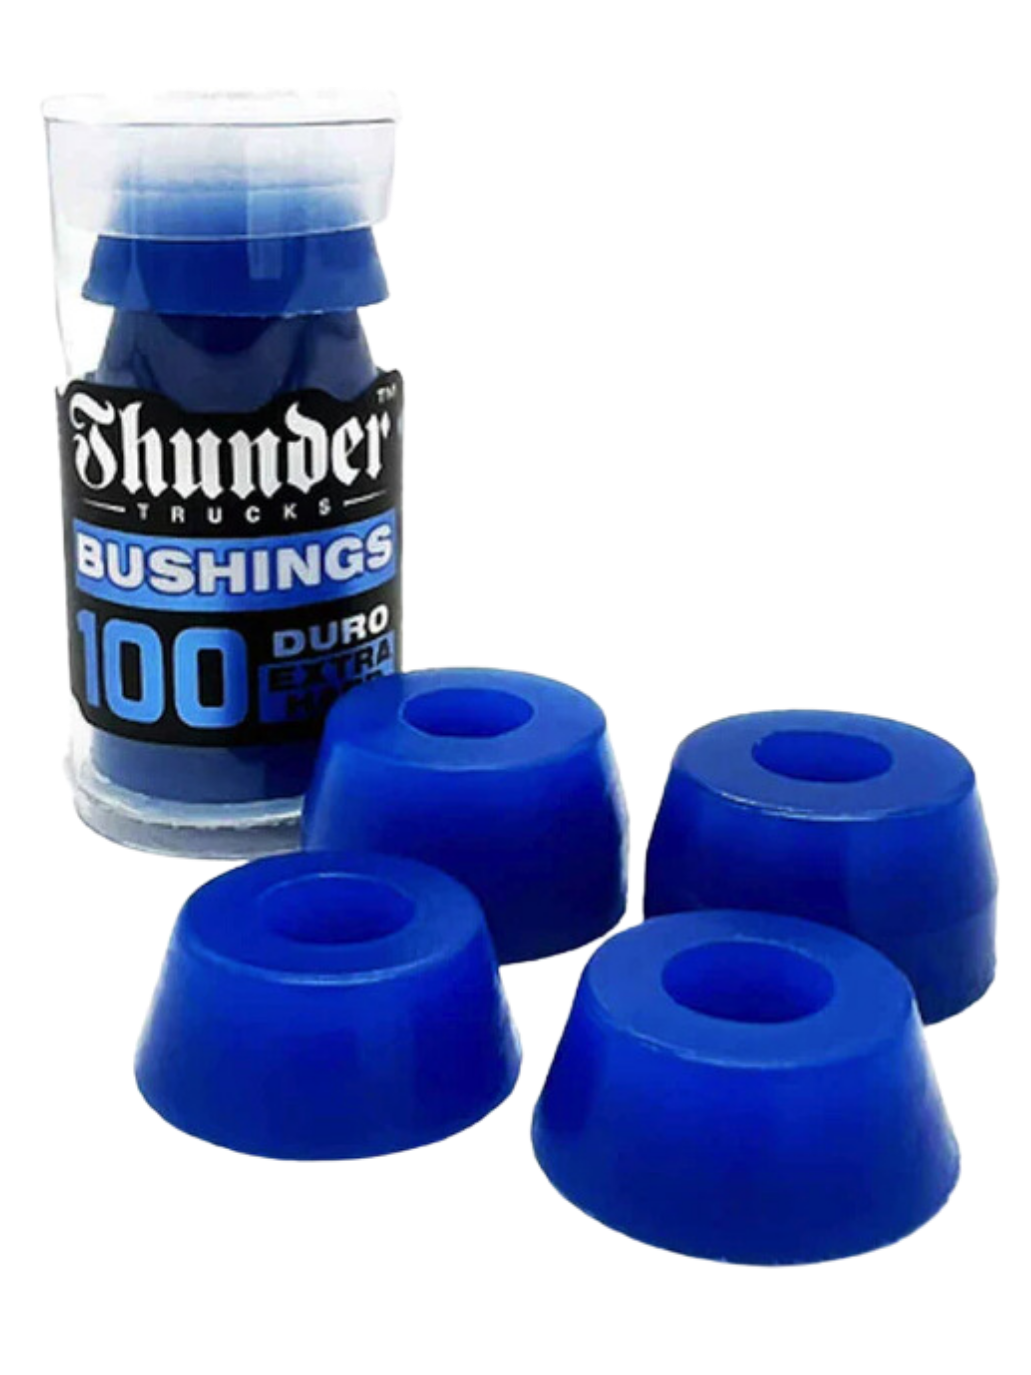 Gomas ejes Thunder Premium 100A Bushings (Deep Blue) | Gomas / Bushings de Skate | Skate Parts | Skate Shop | Tablas, Ejes, Ruedas,... | surfdevils.com